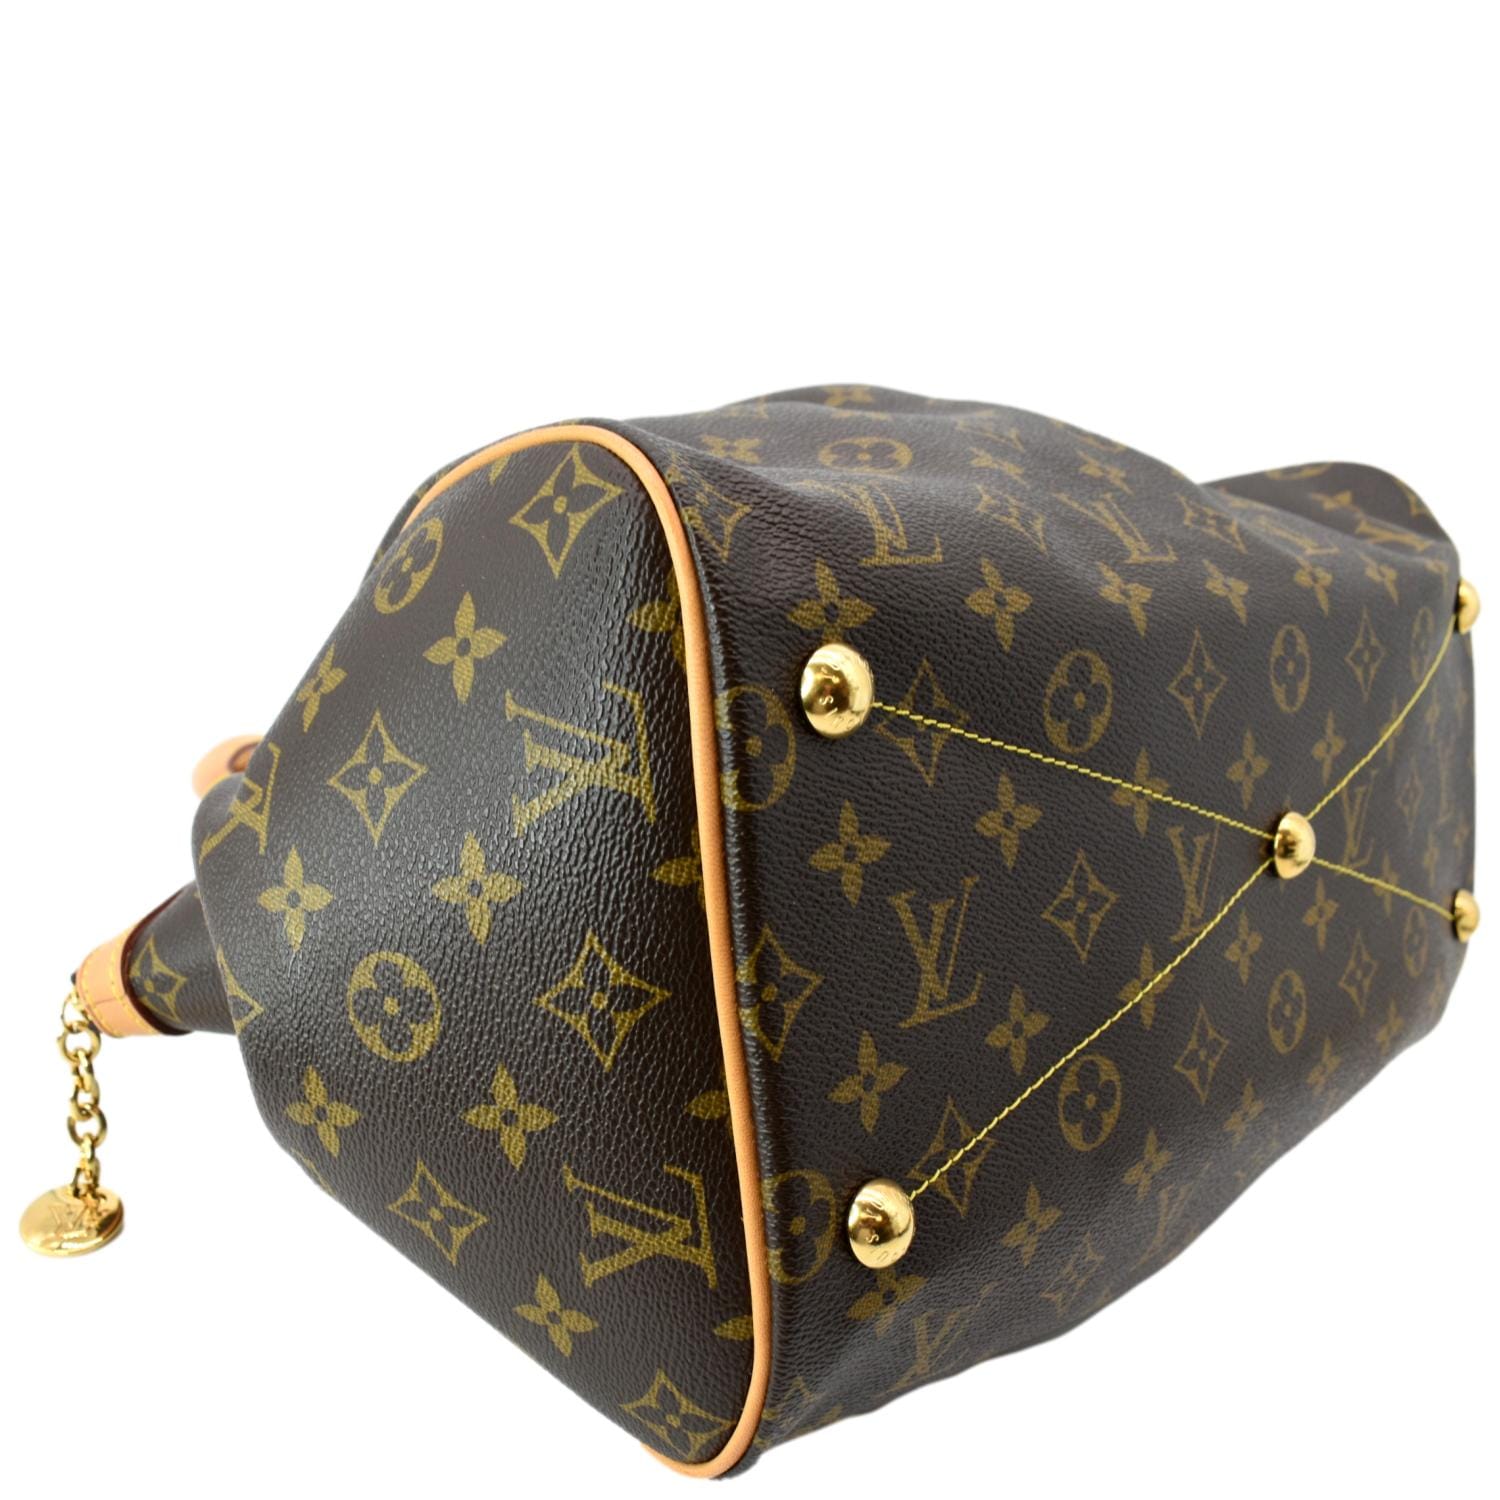 Louis Vuitton Tivoli Top Satchel Handbag Monogram Canvas PM Brown